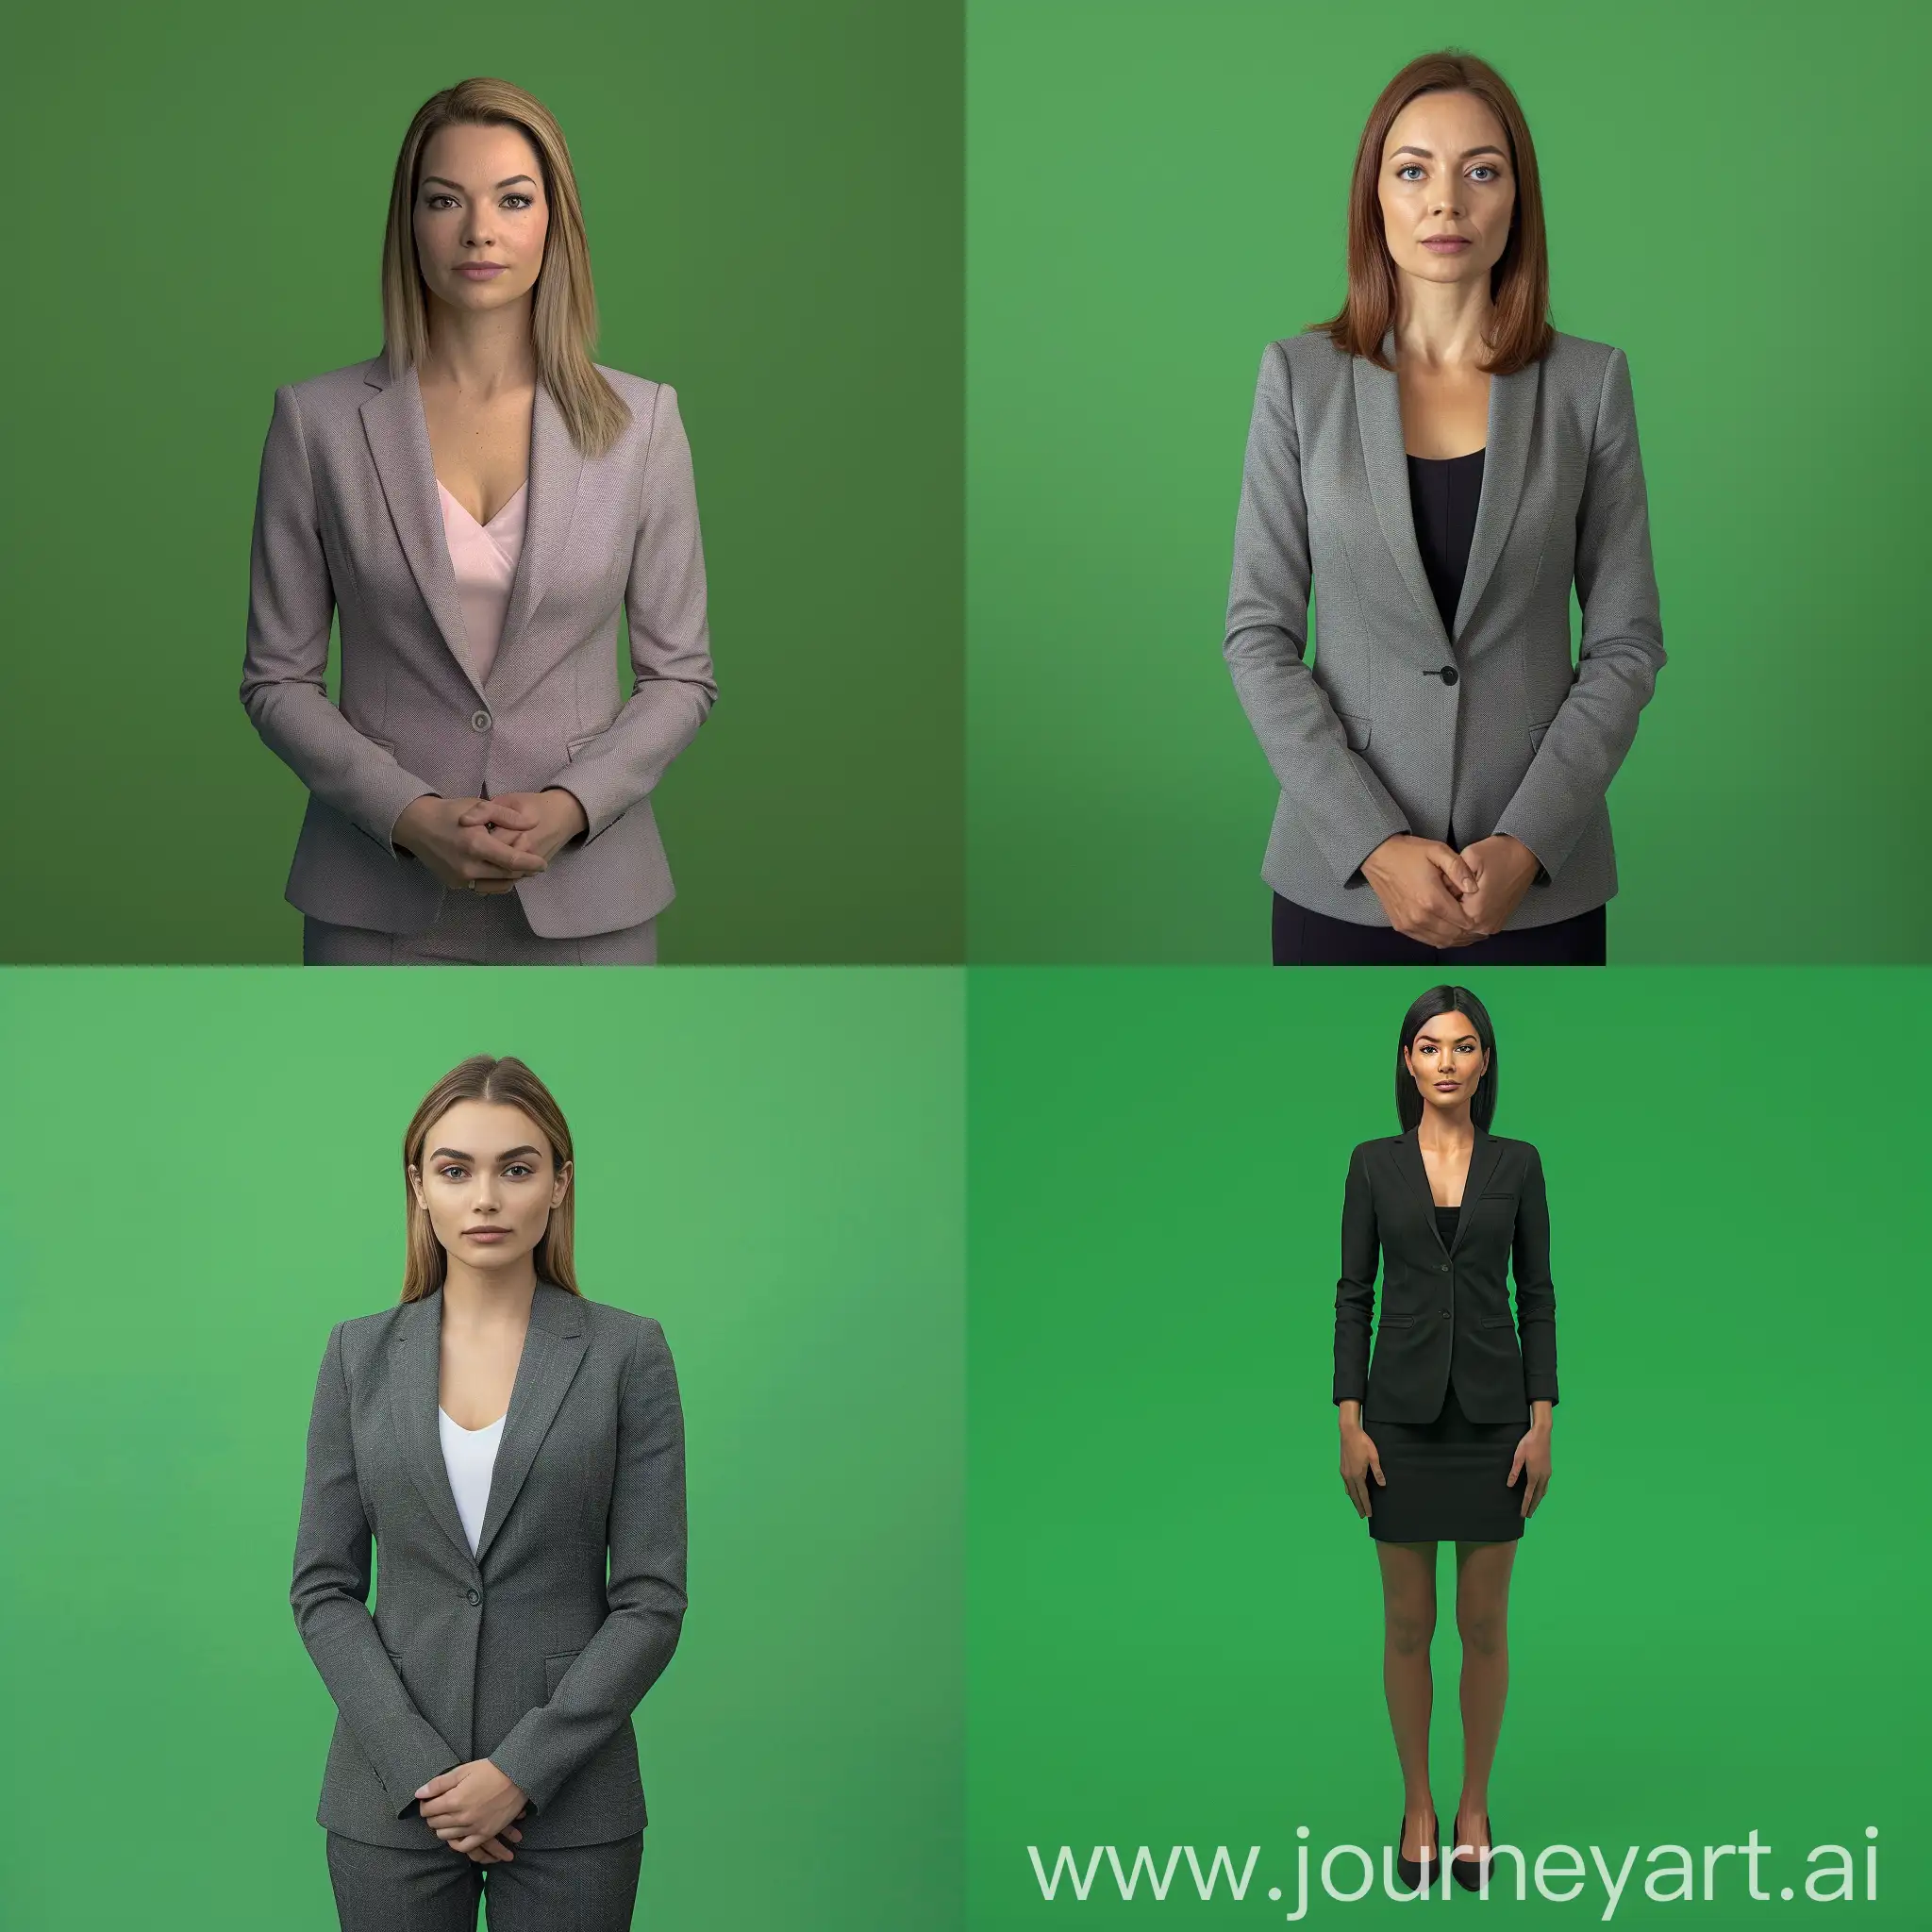 Formal-Female-News-Presenter-Portrait-on-Chroma-Green-Background